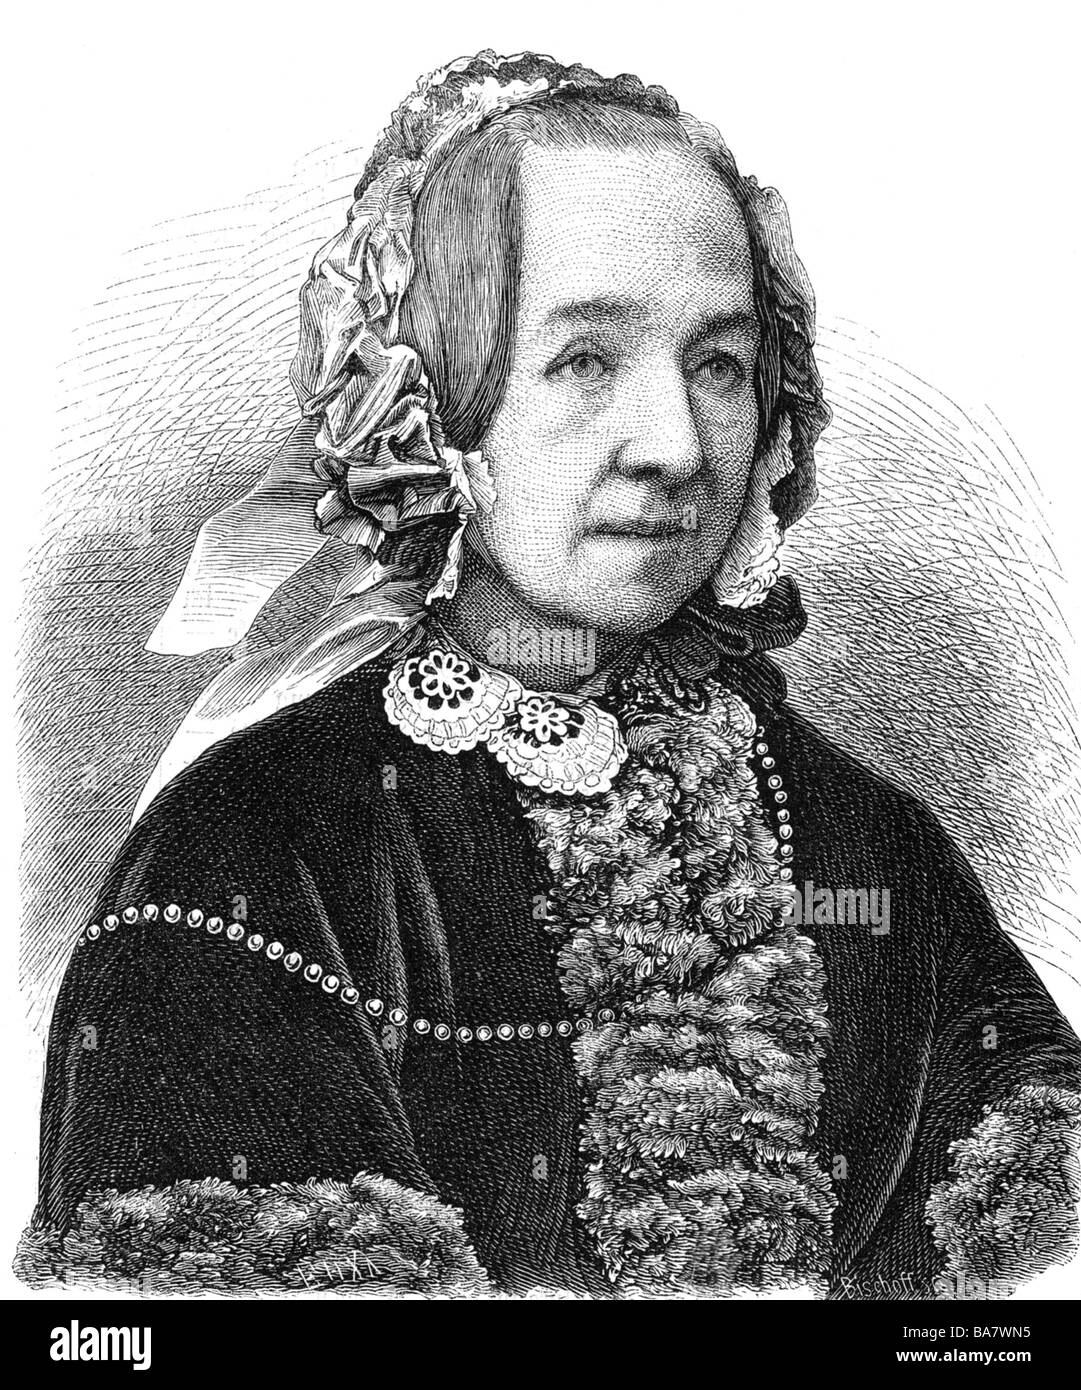 Bremer, Fredrika, 17.8.1801 - 31.12.1865, escritor / autor sueco, retrato, grabado con tapa, siglo 19, Foto de stock